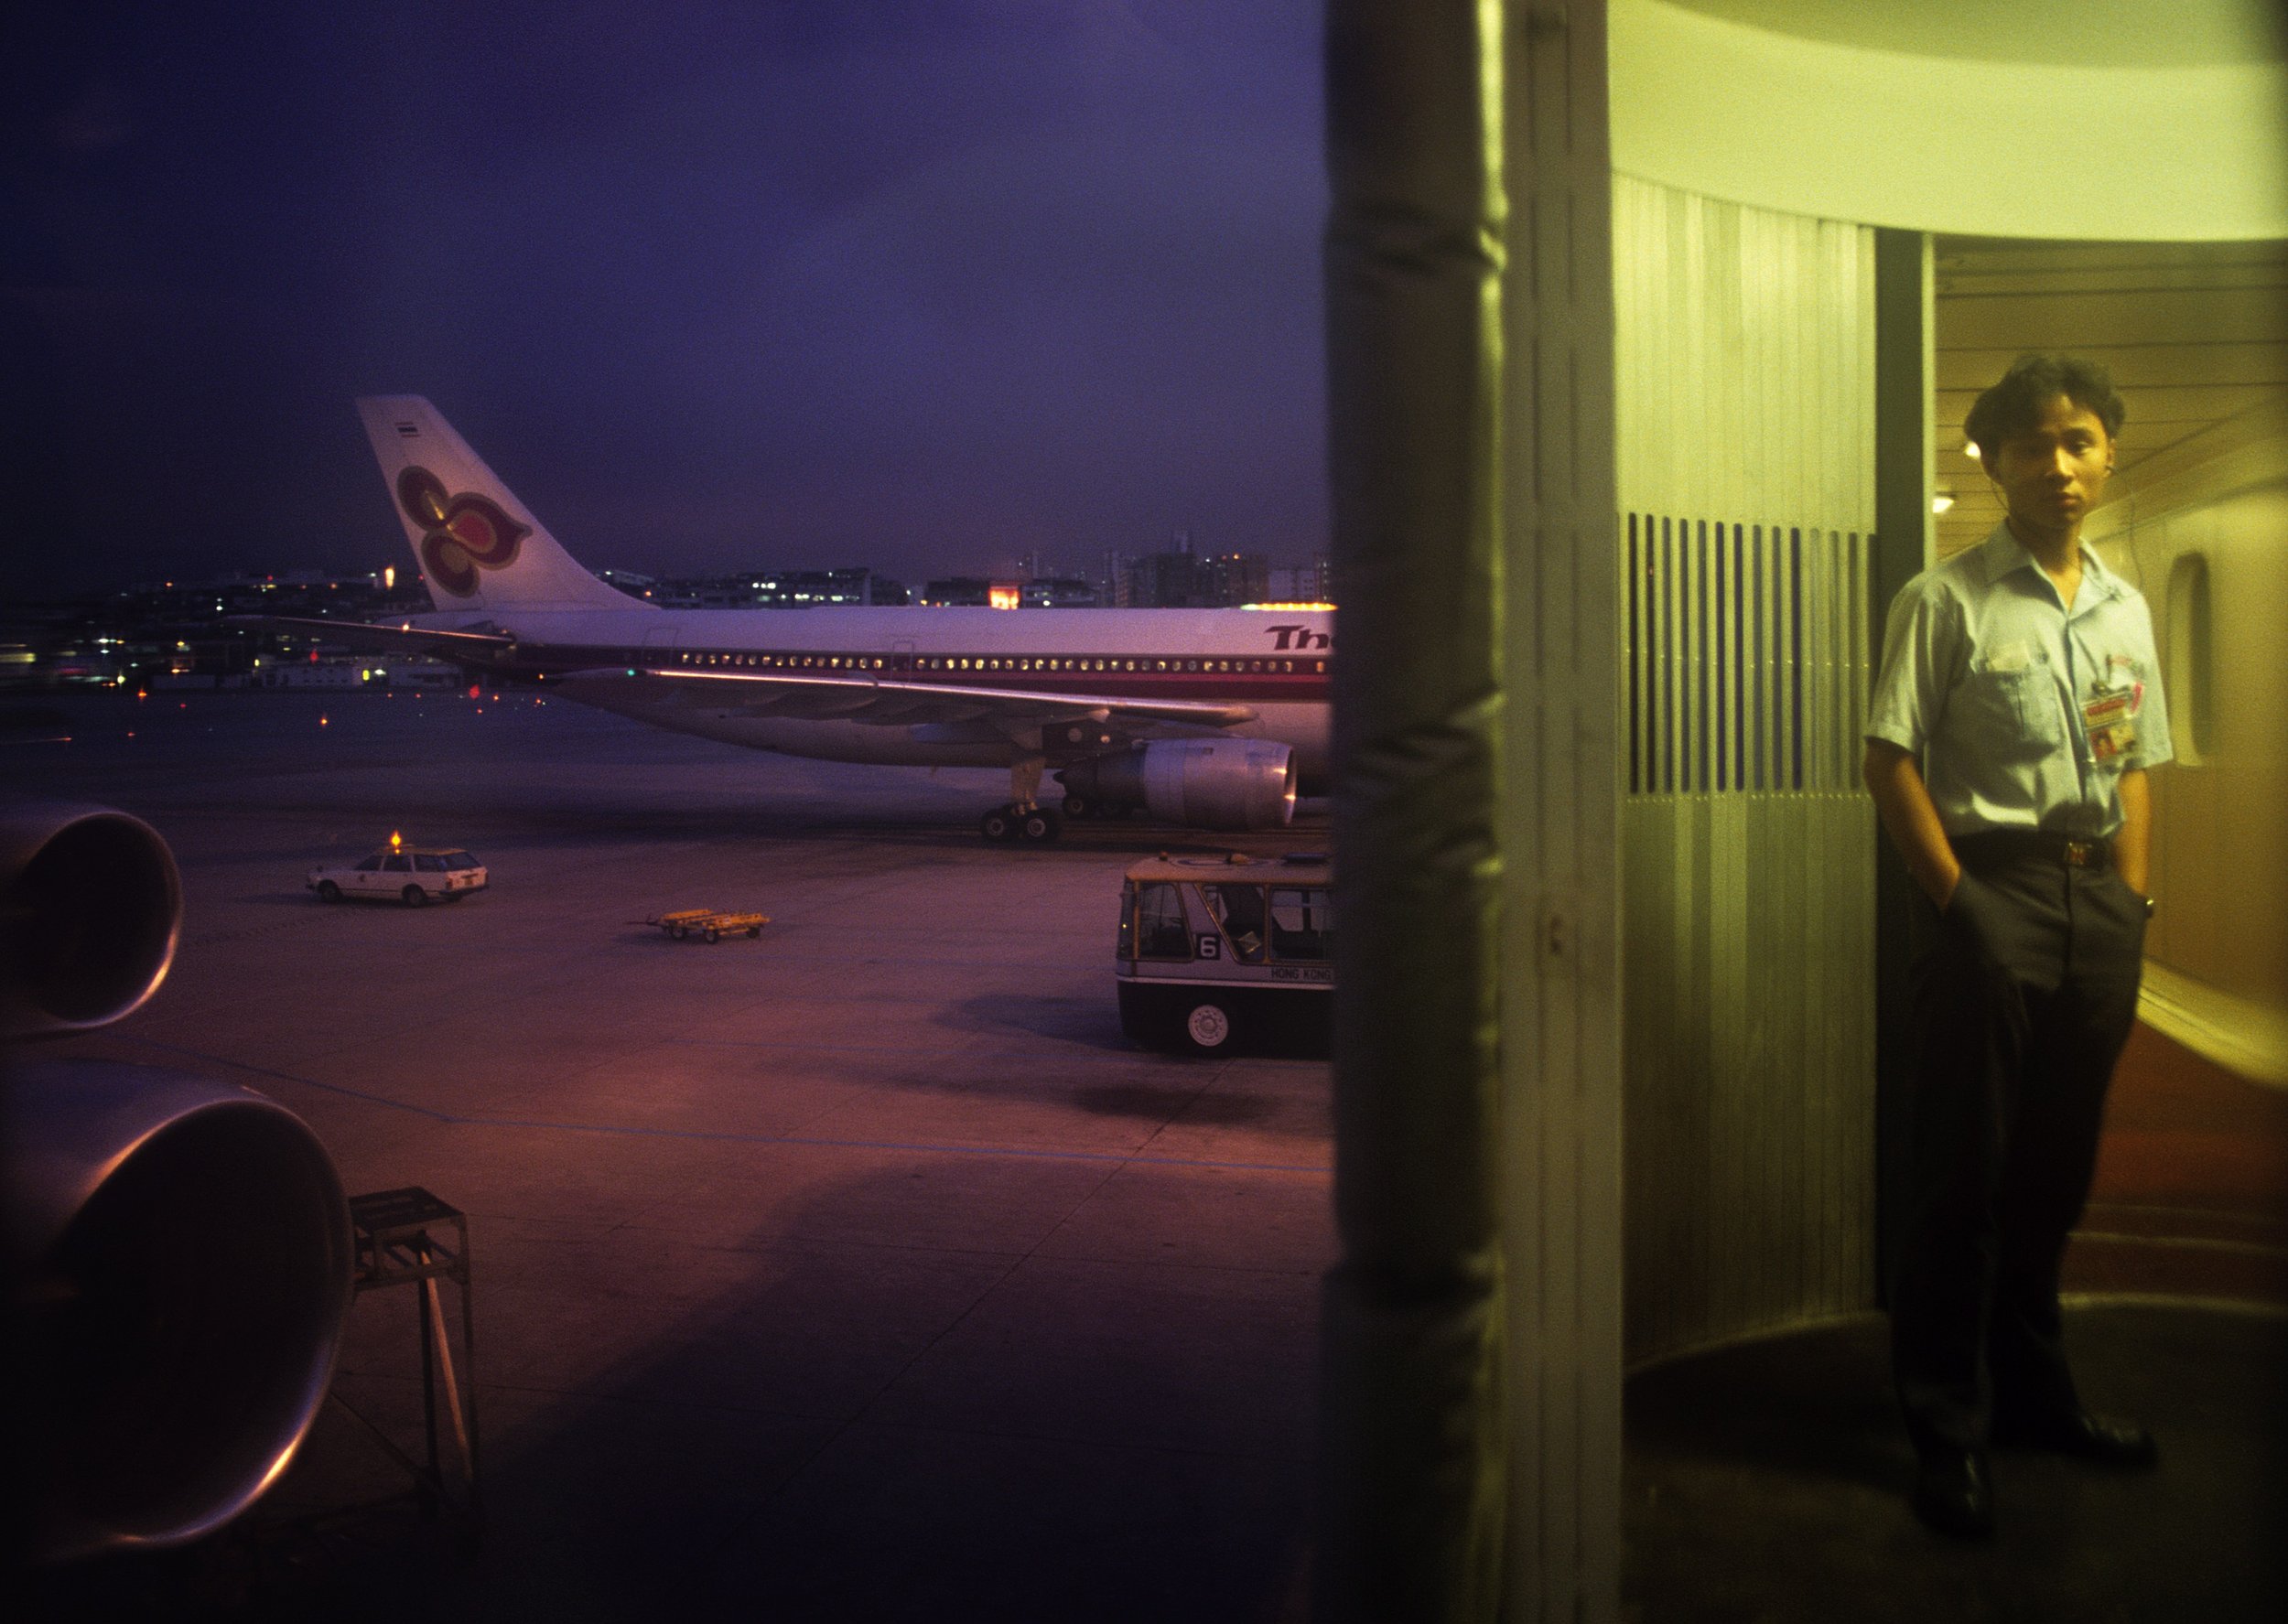 Greg Girard, Arriving Kai Tak Airport from Beijing in June, Hong Kong 1989, Courtesy of Blue Lotus Gallery